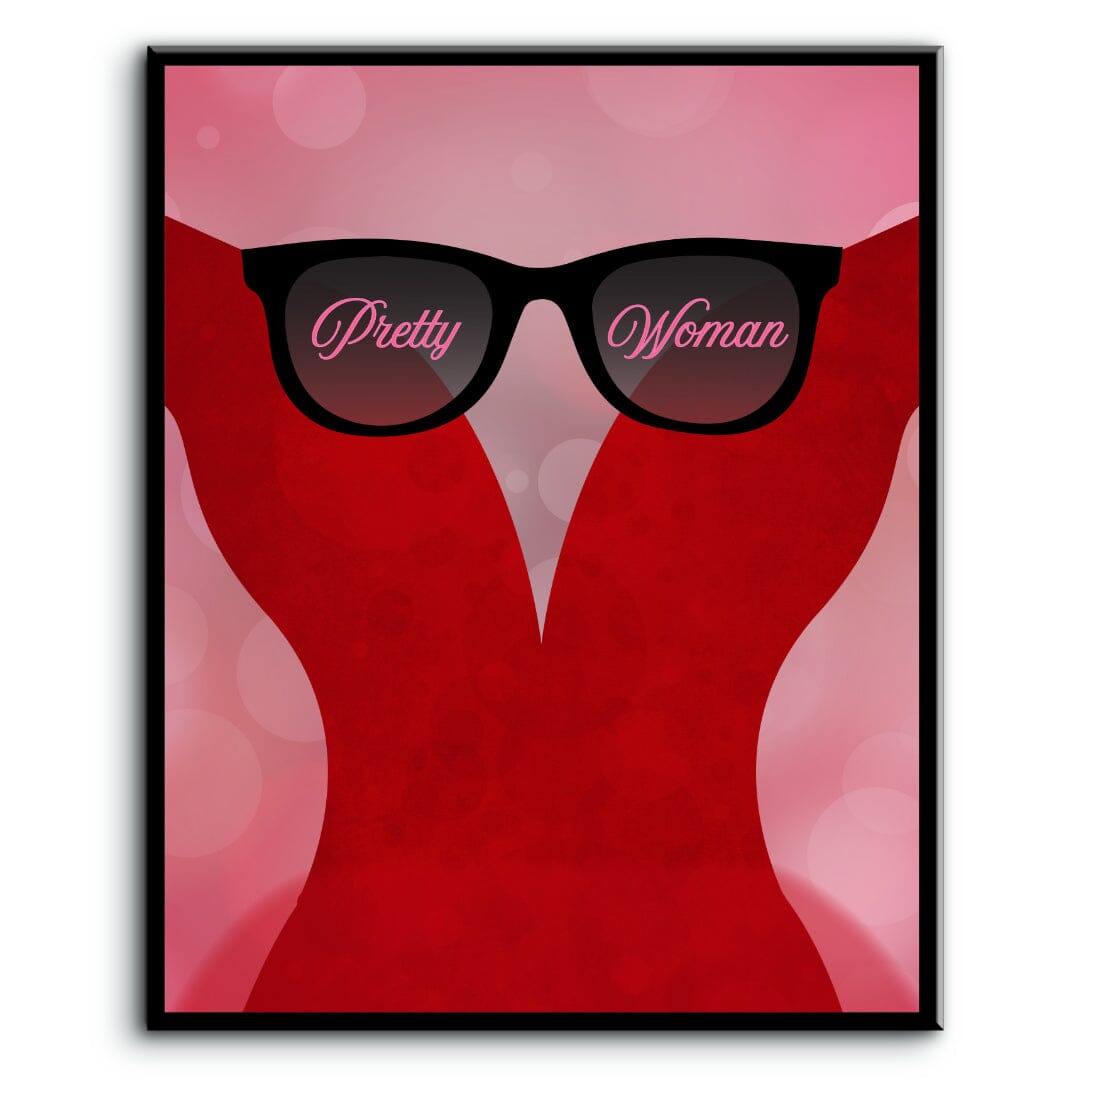 Pretty Woman by Roy Orbison - Lyric Inspired 60s Music Print Song Lyrics Art Song Lyrics Art 8x10 Plaque Mount 